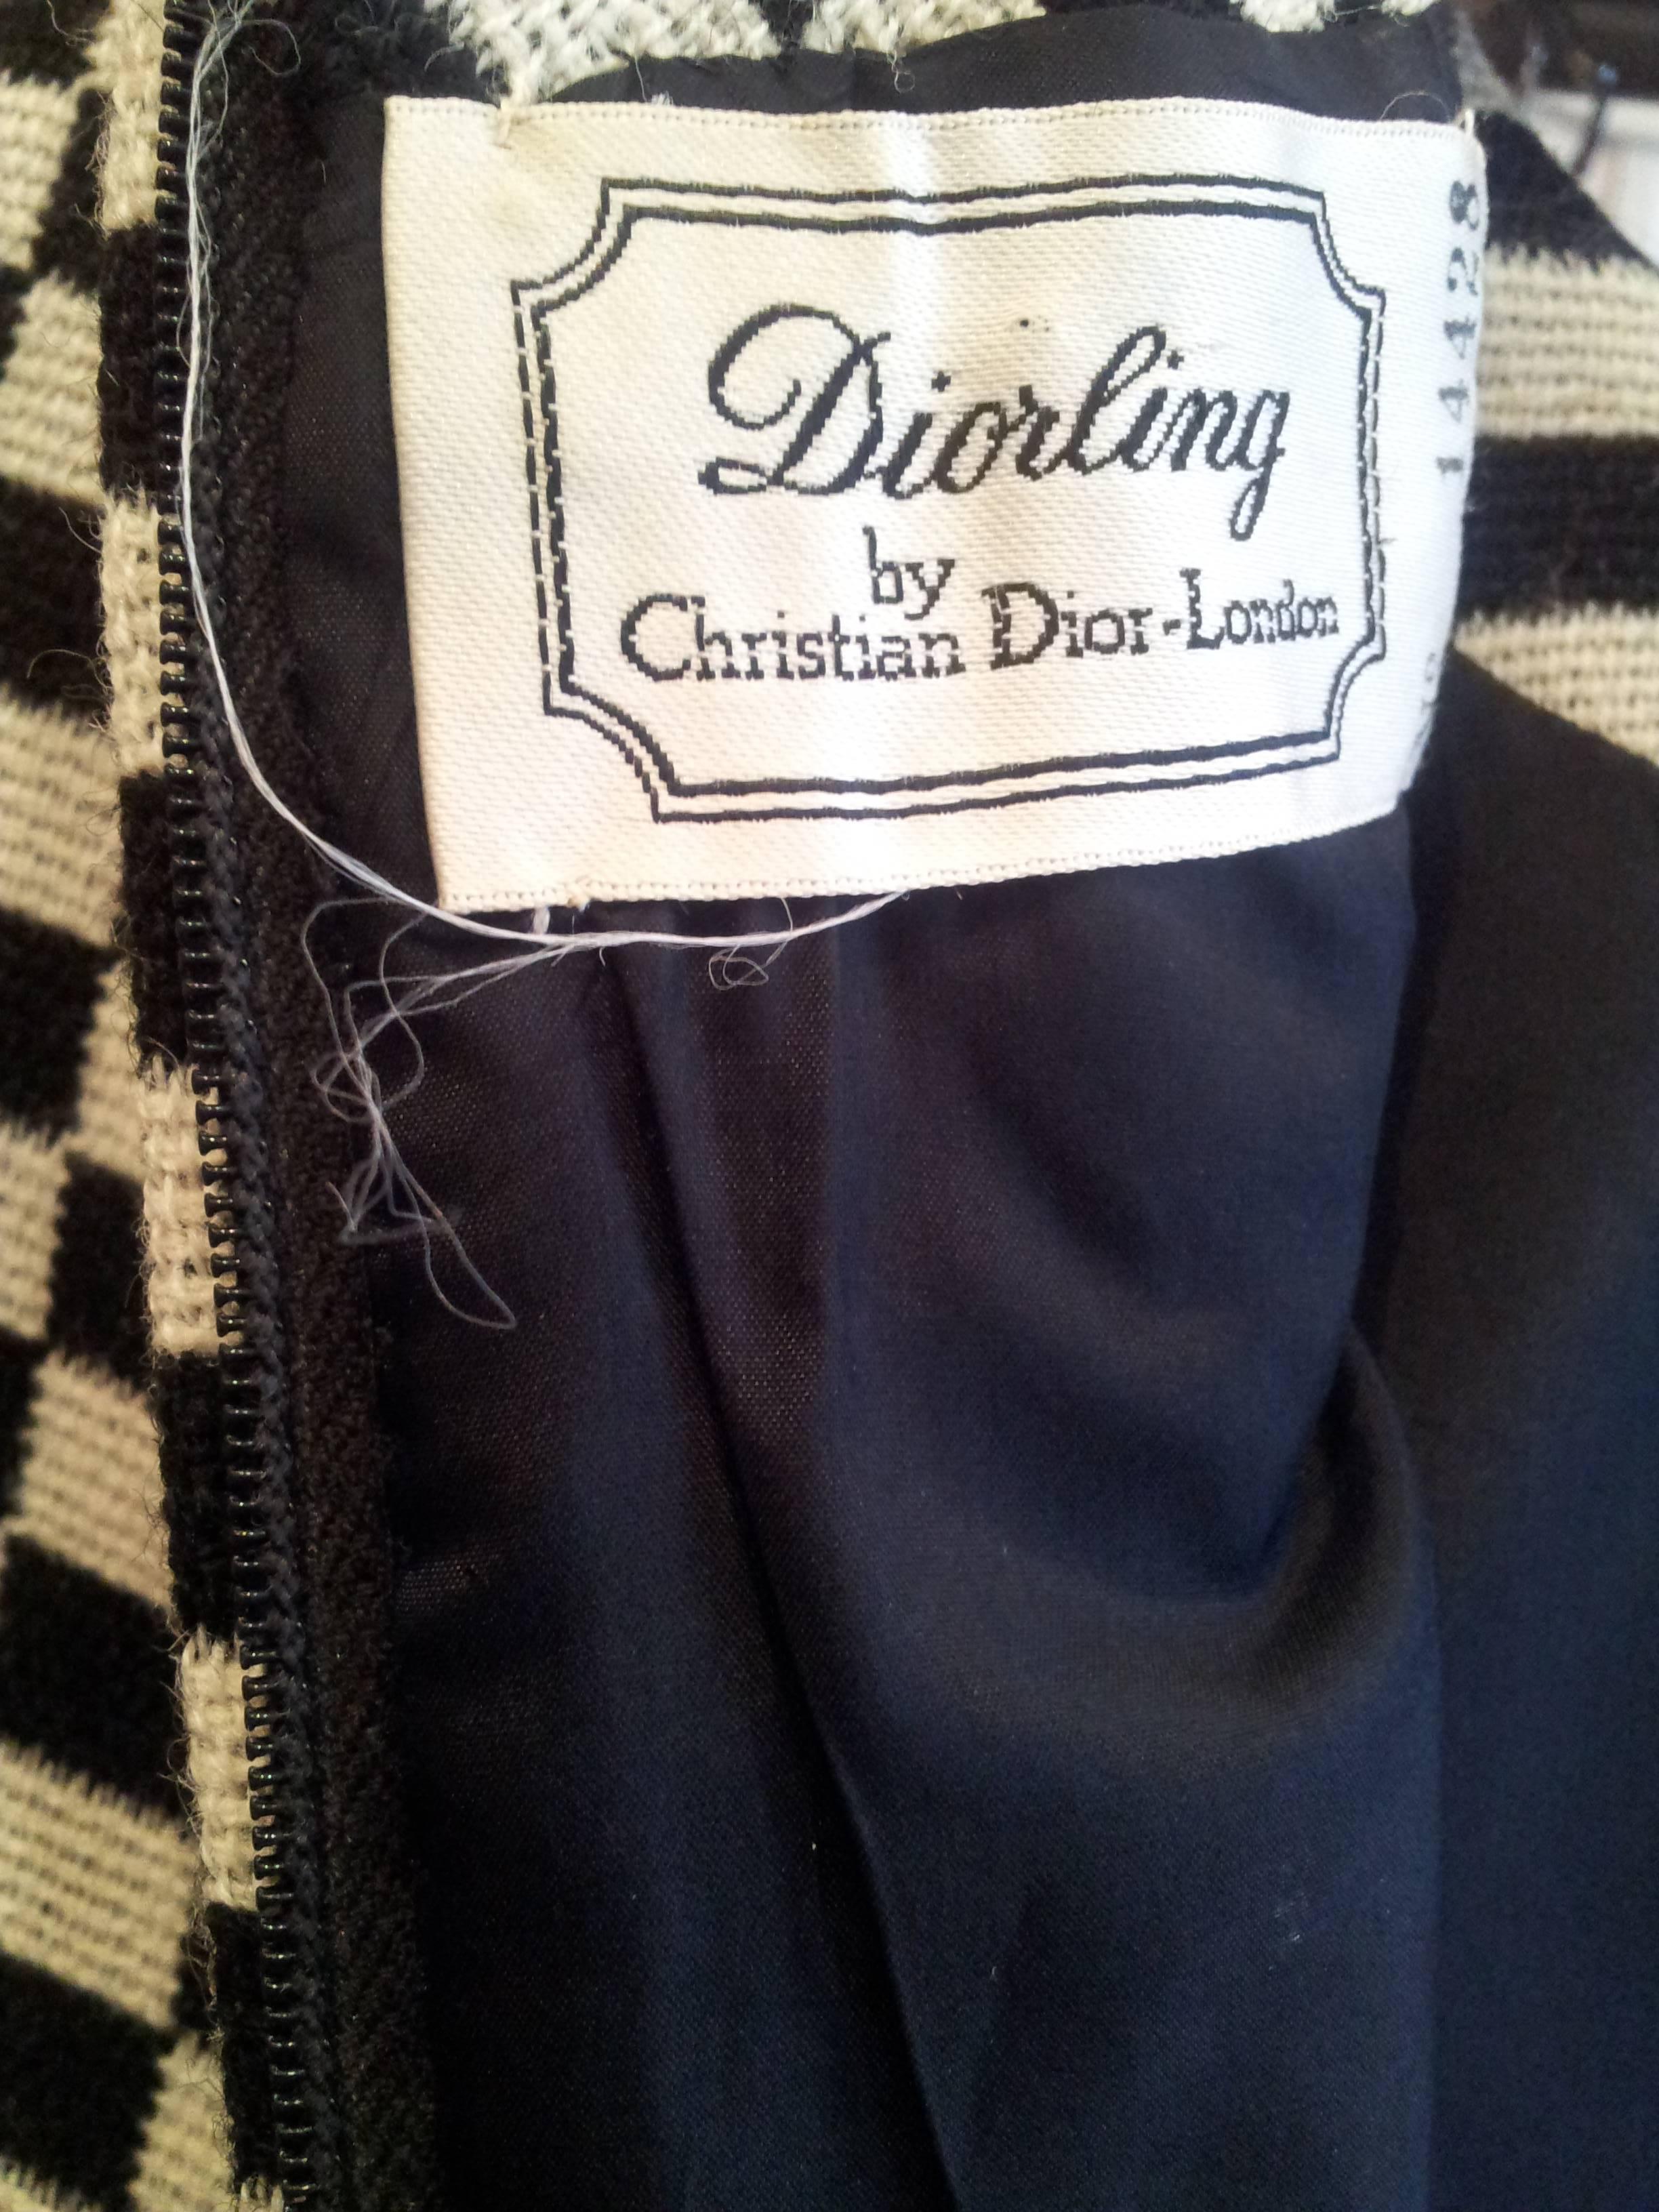 Beige 1960s Christian Dior Monochrome Checked Mod Dress